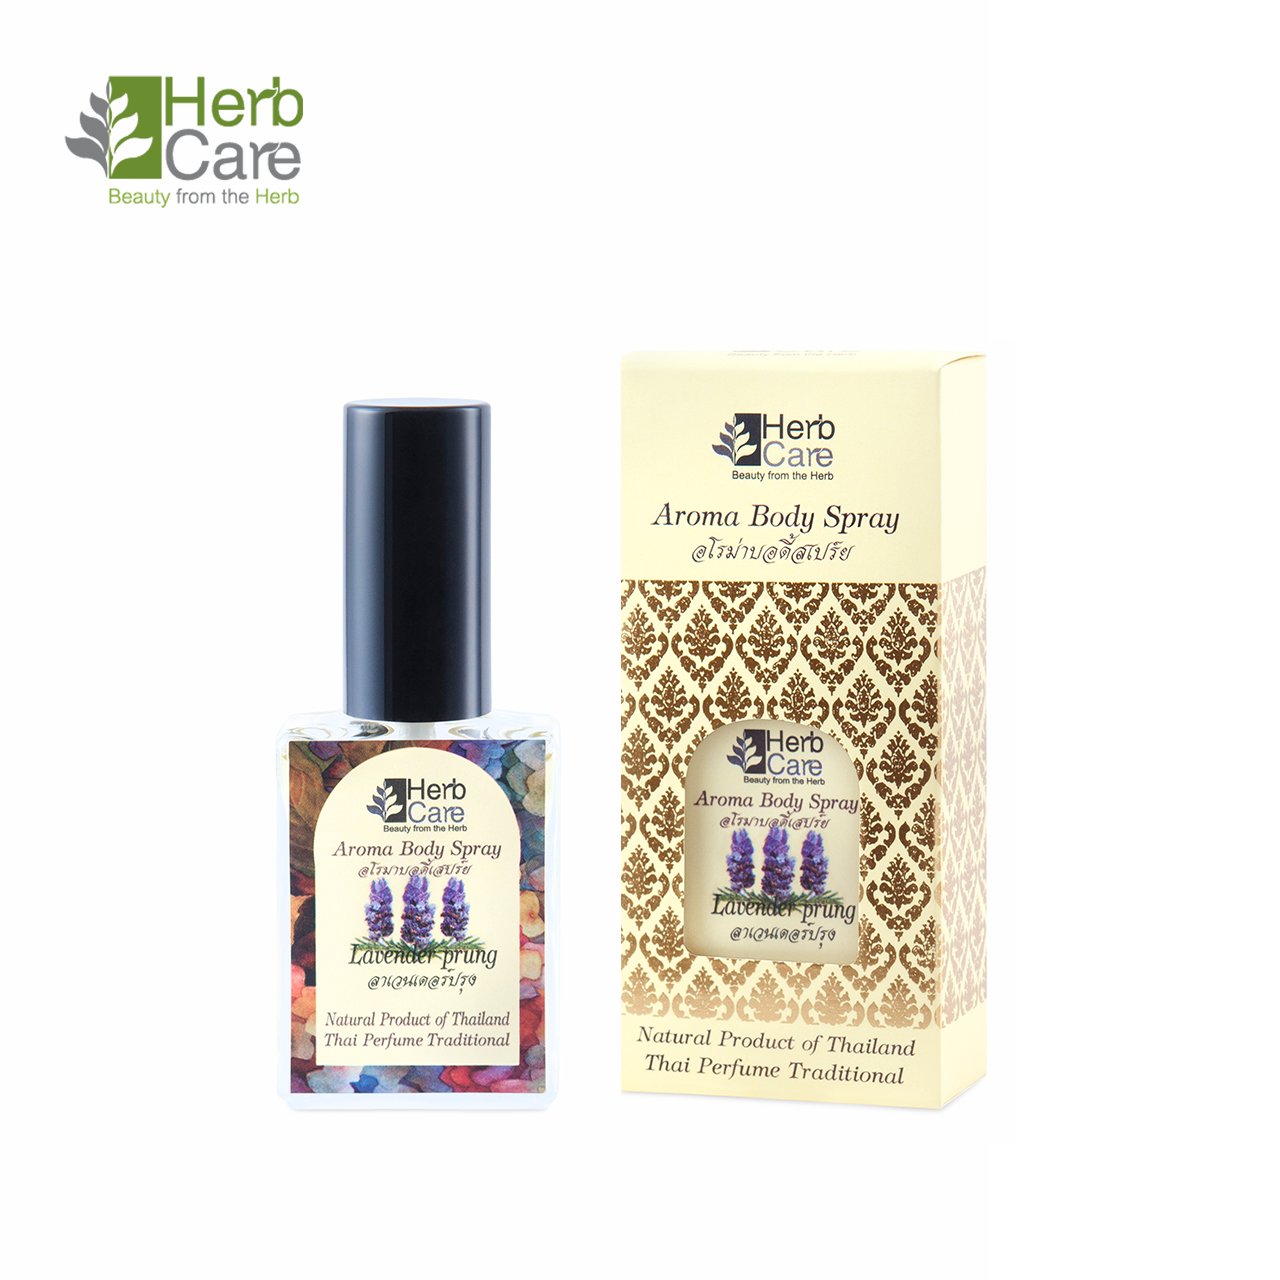 Lavender Prung : Aroma Body Perfume